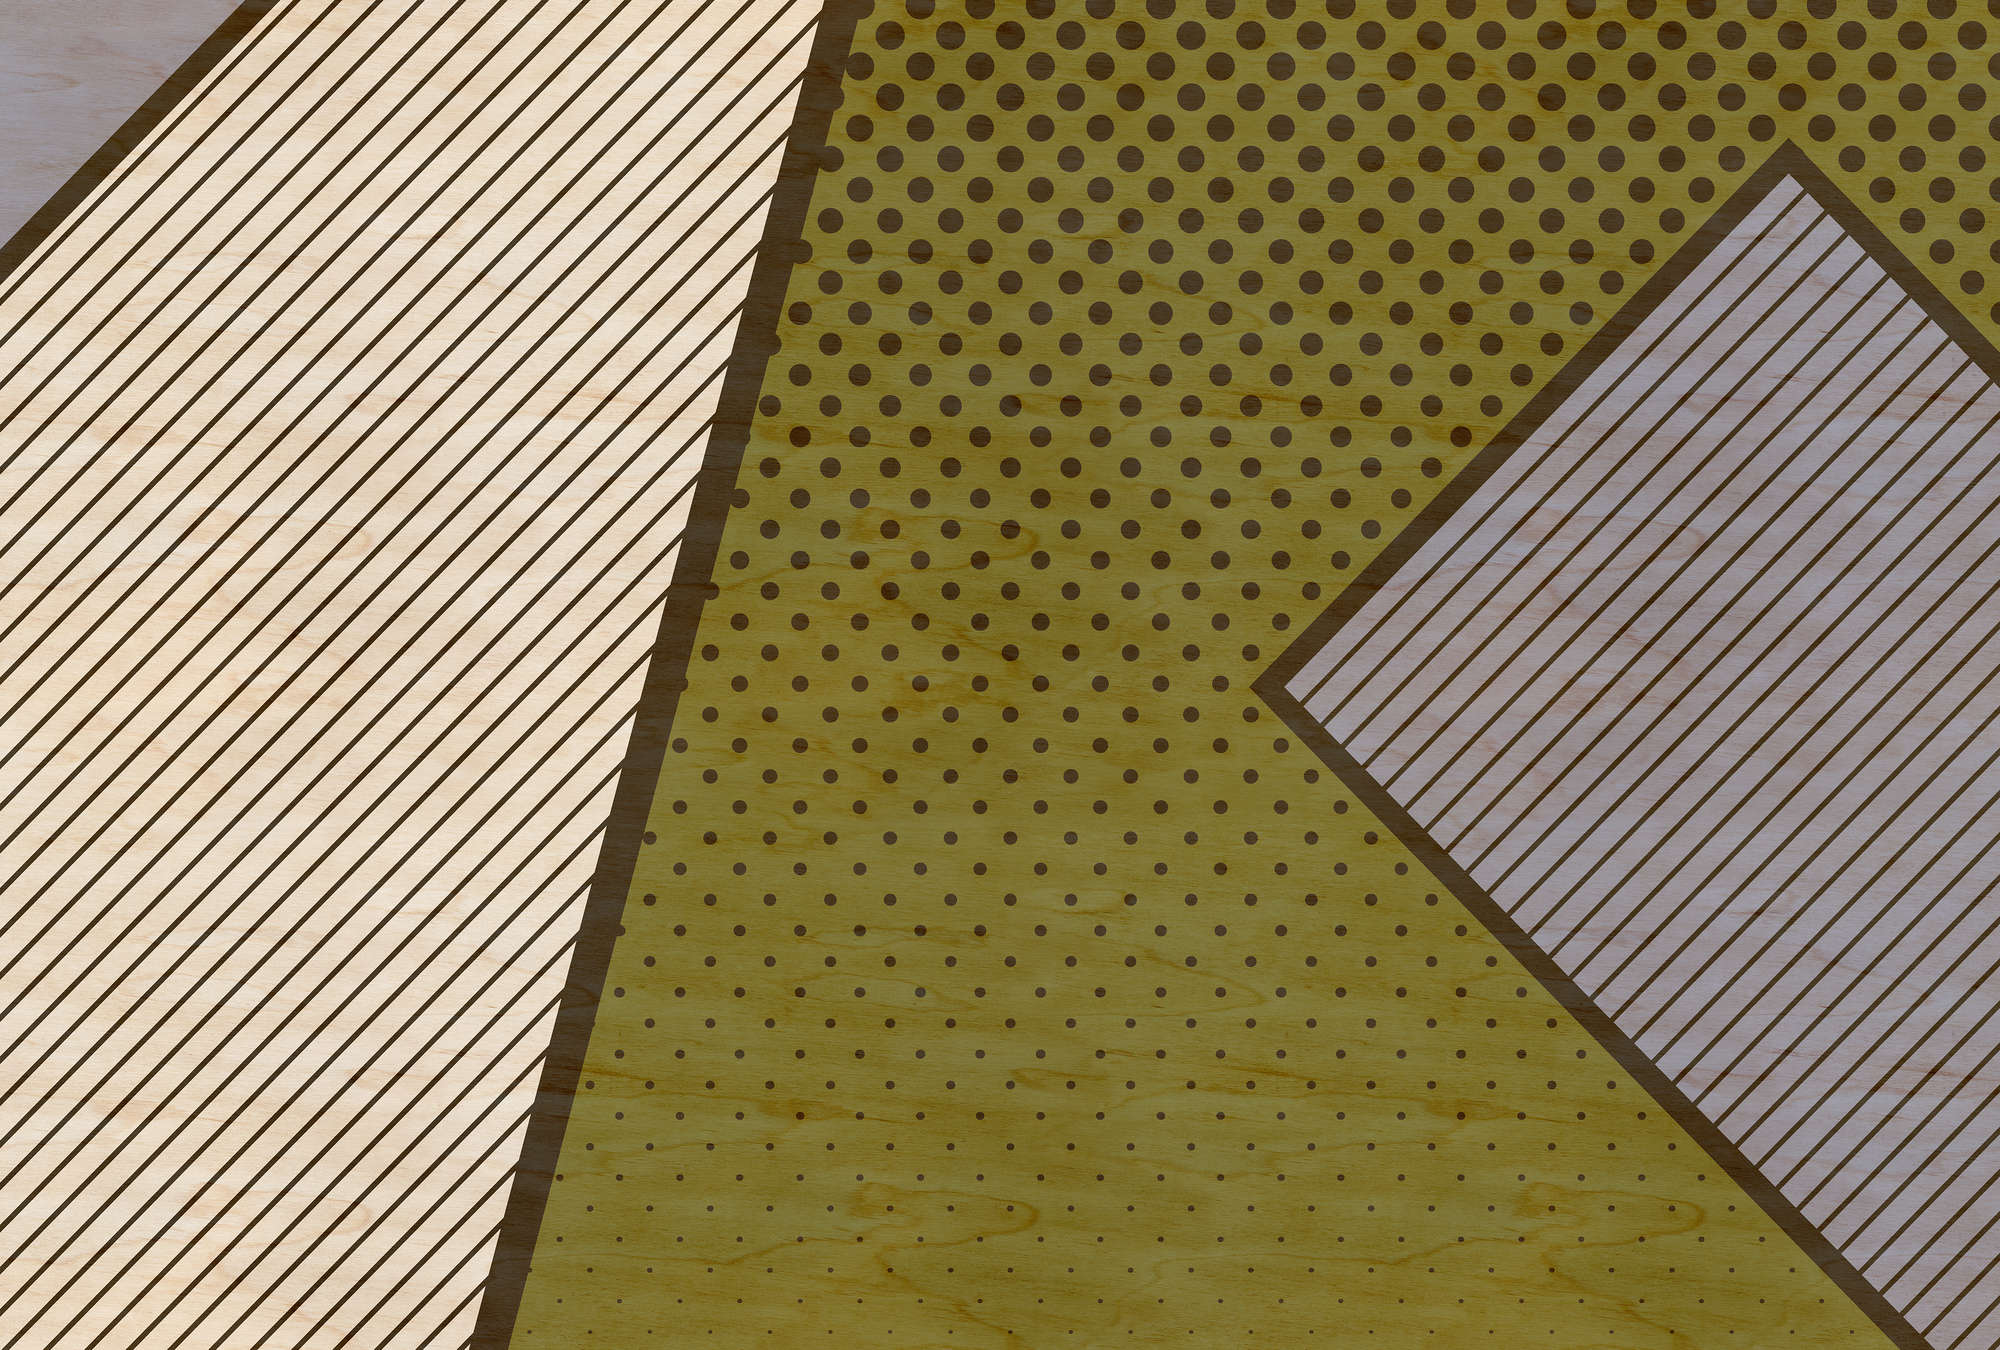             Bird gang 2 - Fotomurali, motivo moderno in stile pop art - struttura in compensato - beige, giallo | struttura in tessuto non tessuto
        